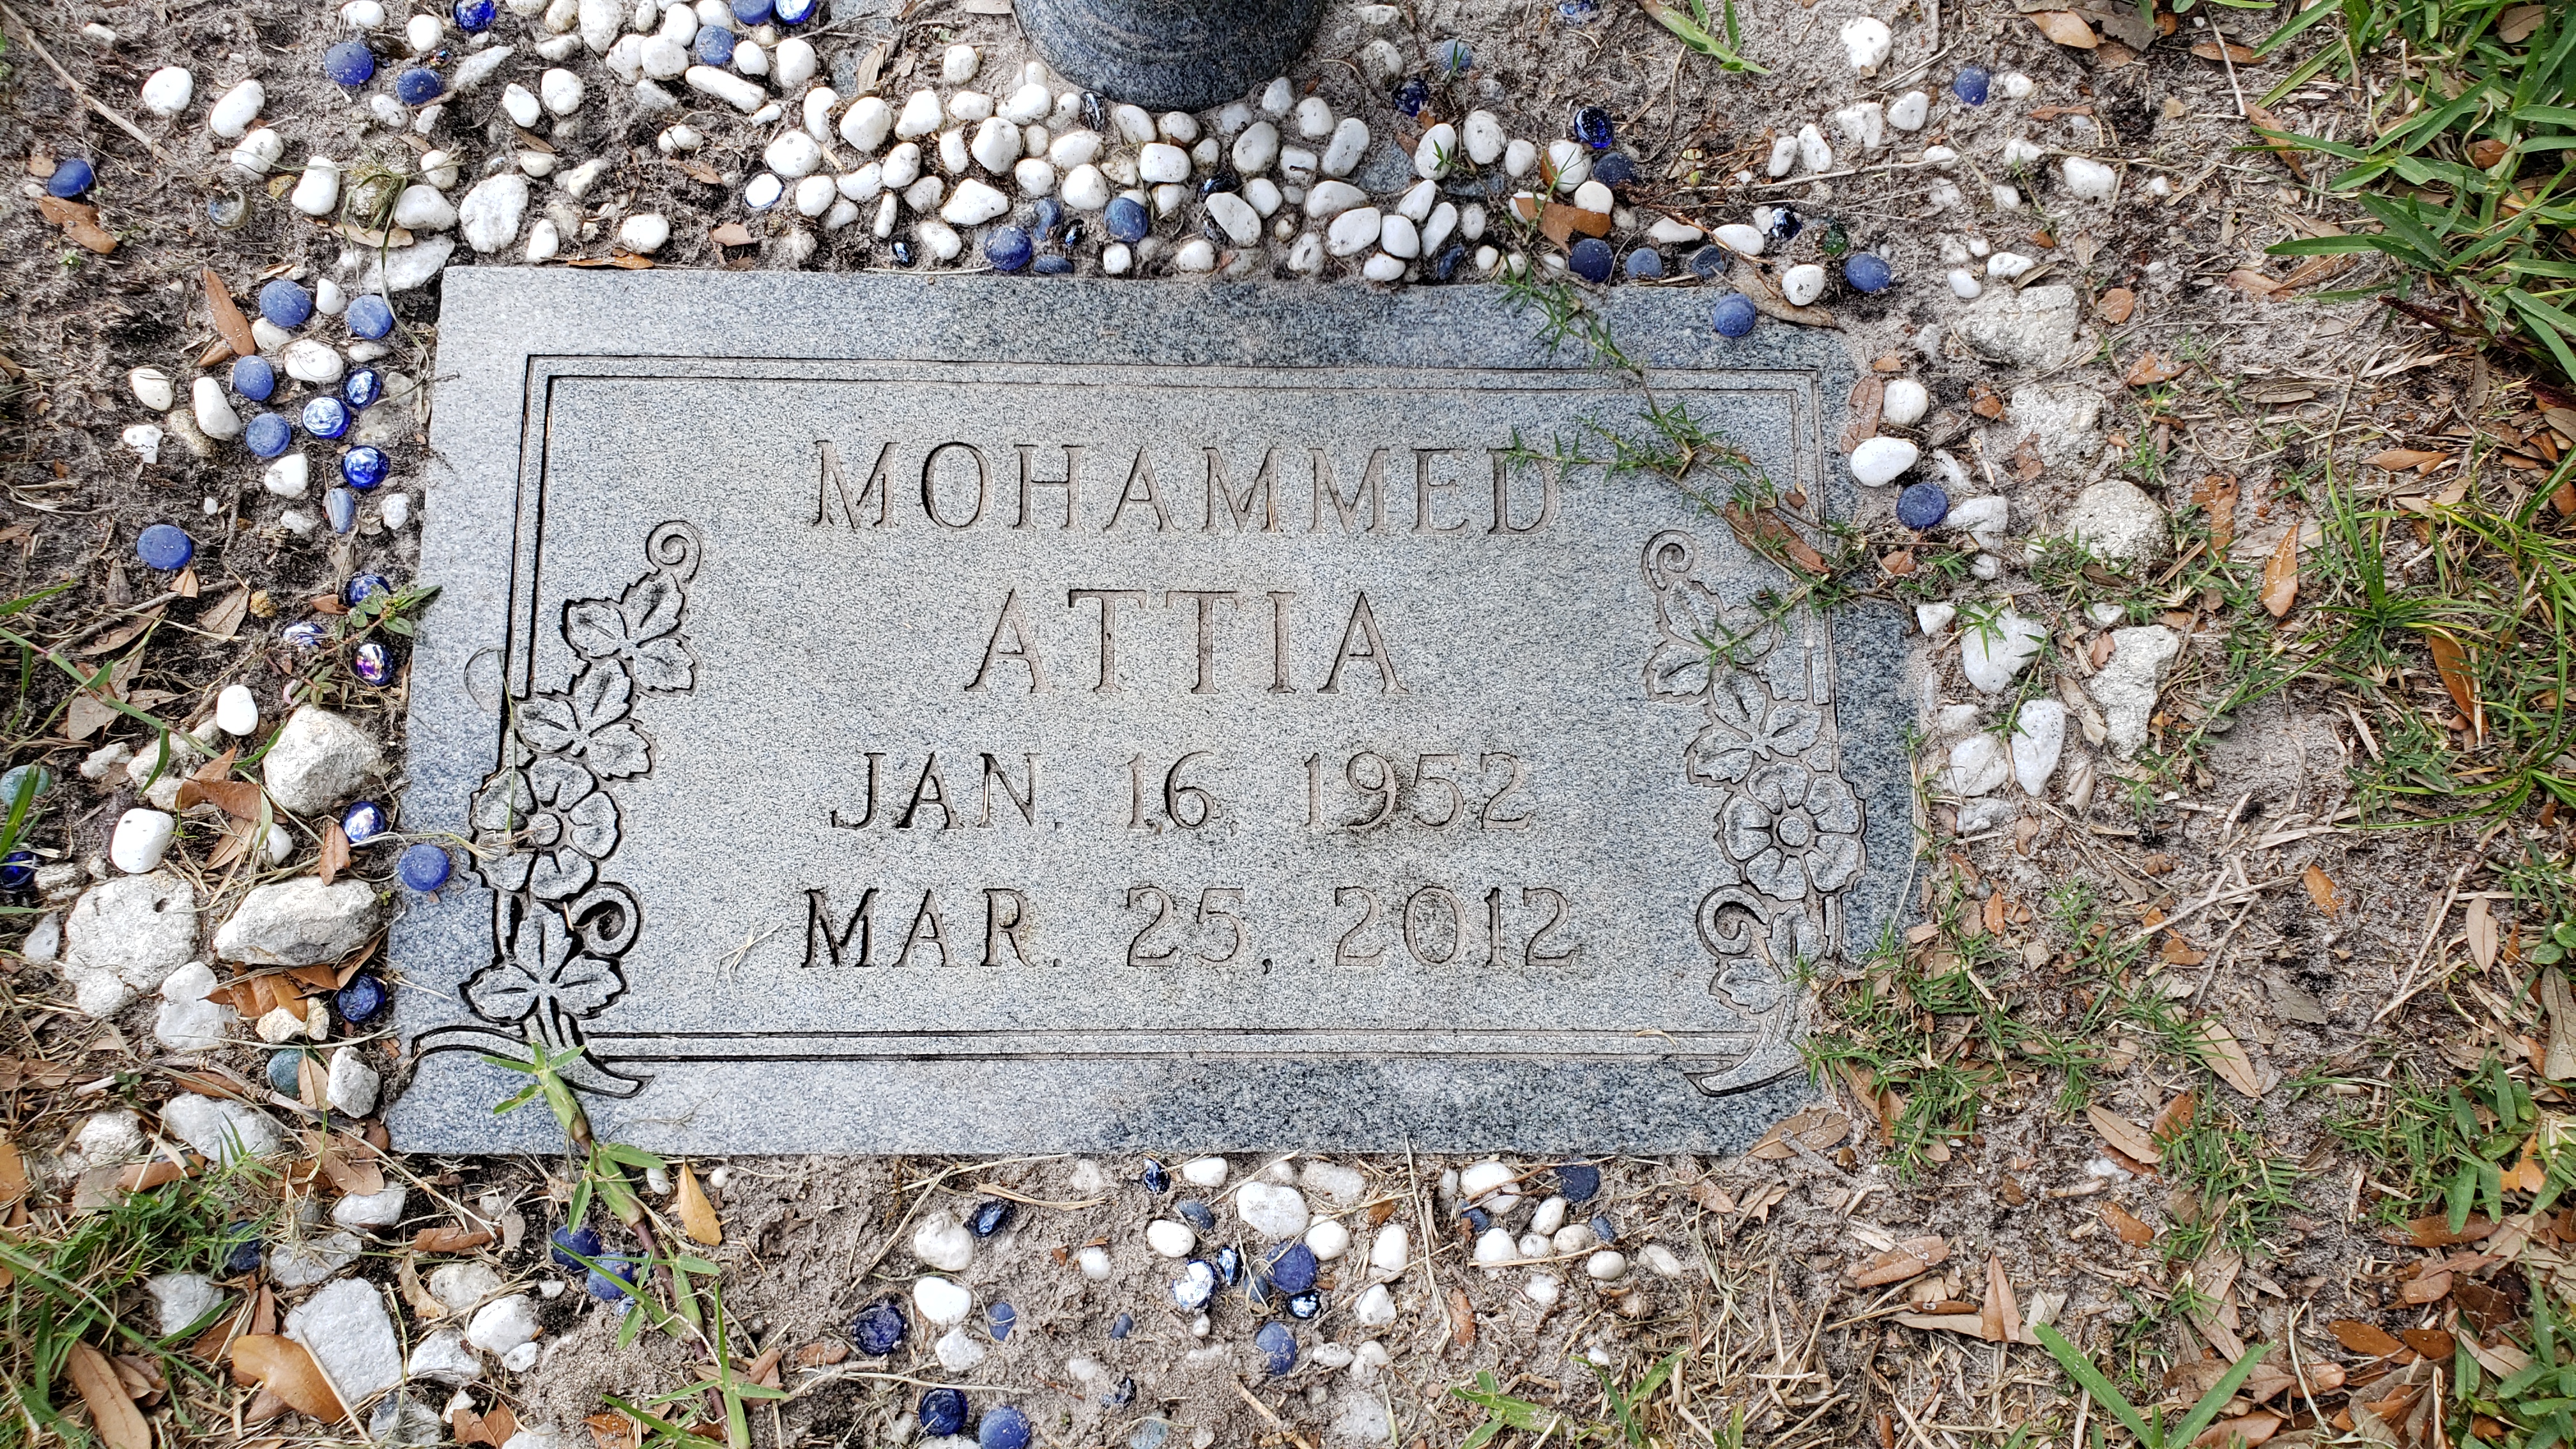 Mohammed Attia